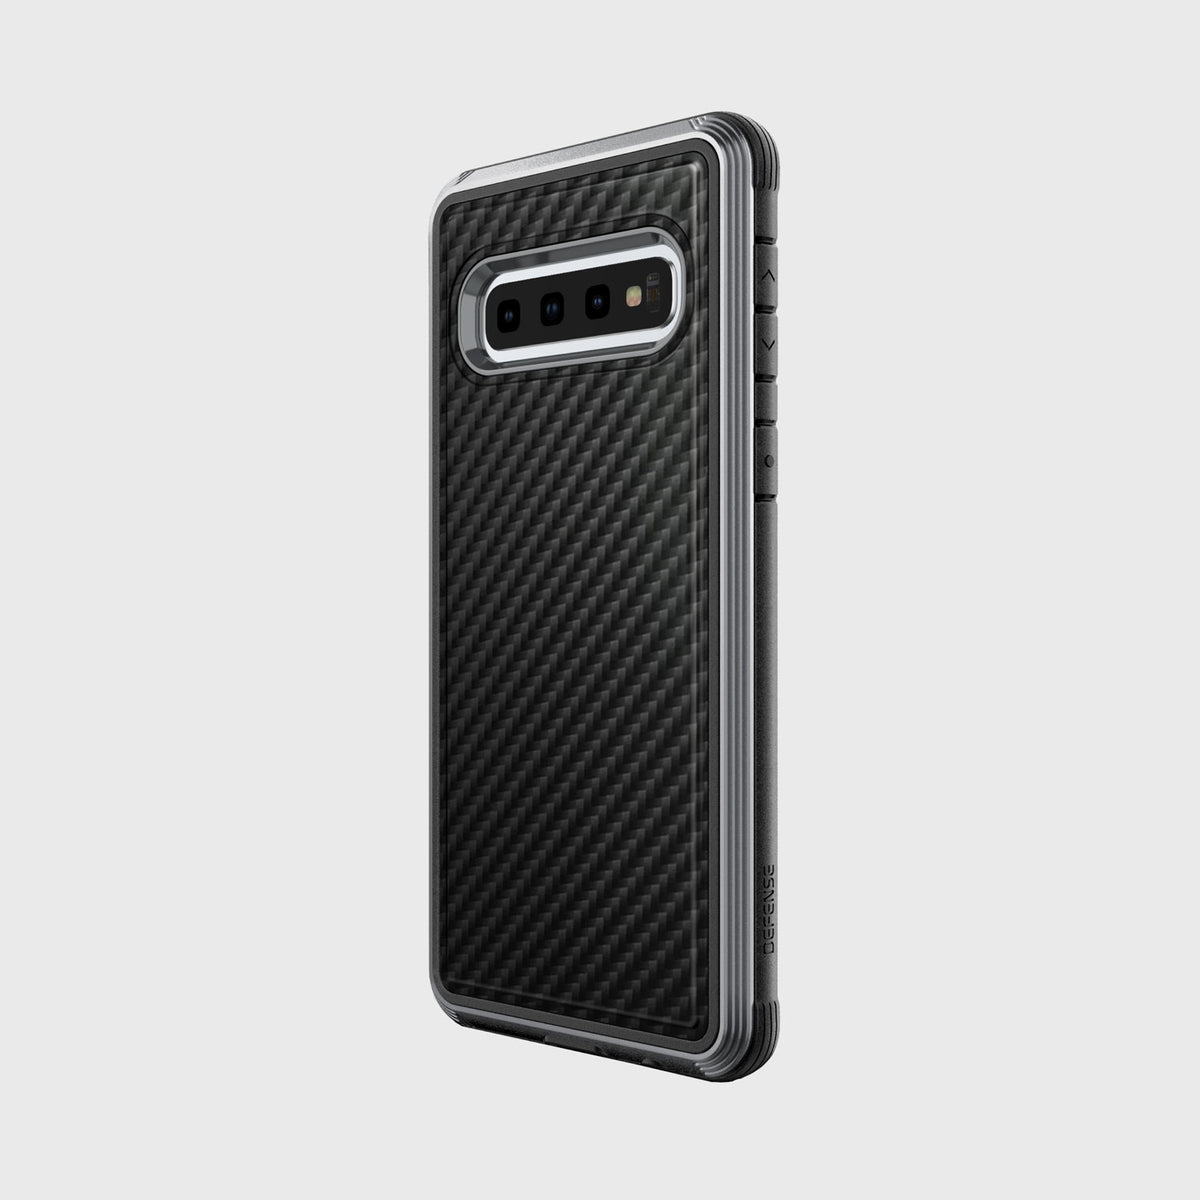 Samsung Galaxy S10 Case Raptic Lux Black Carbon Fiber